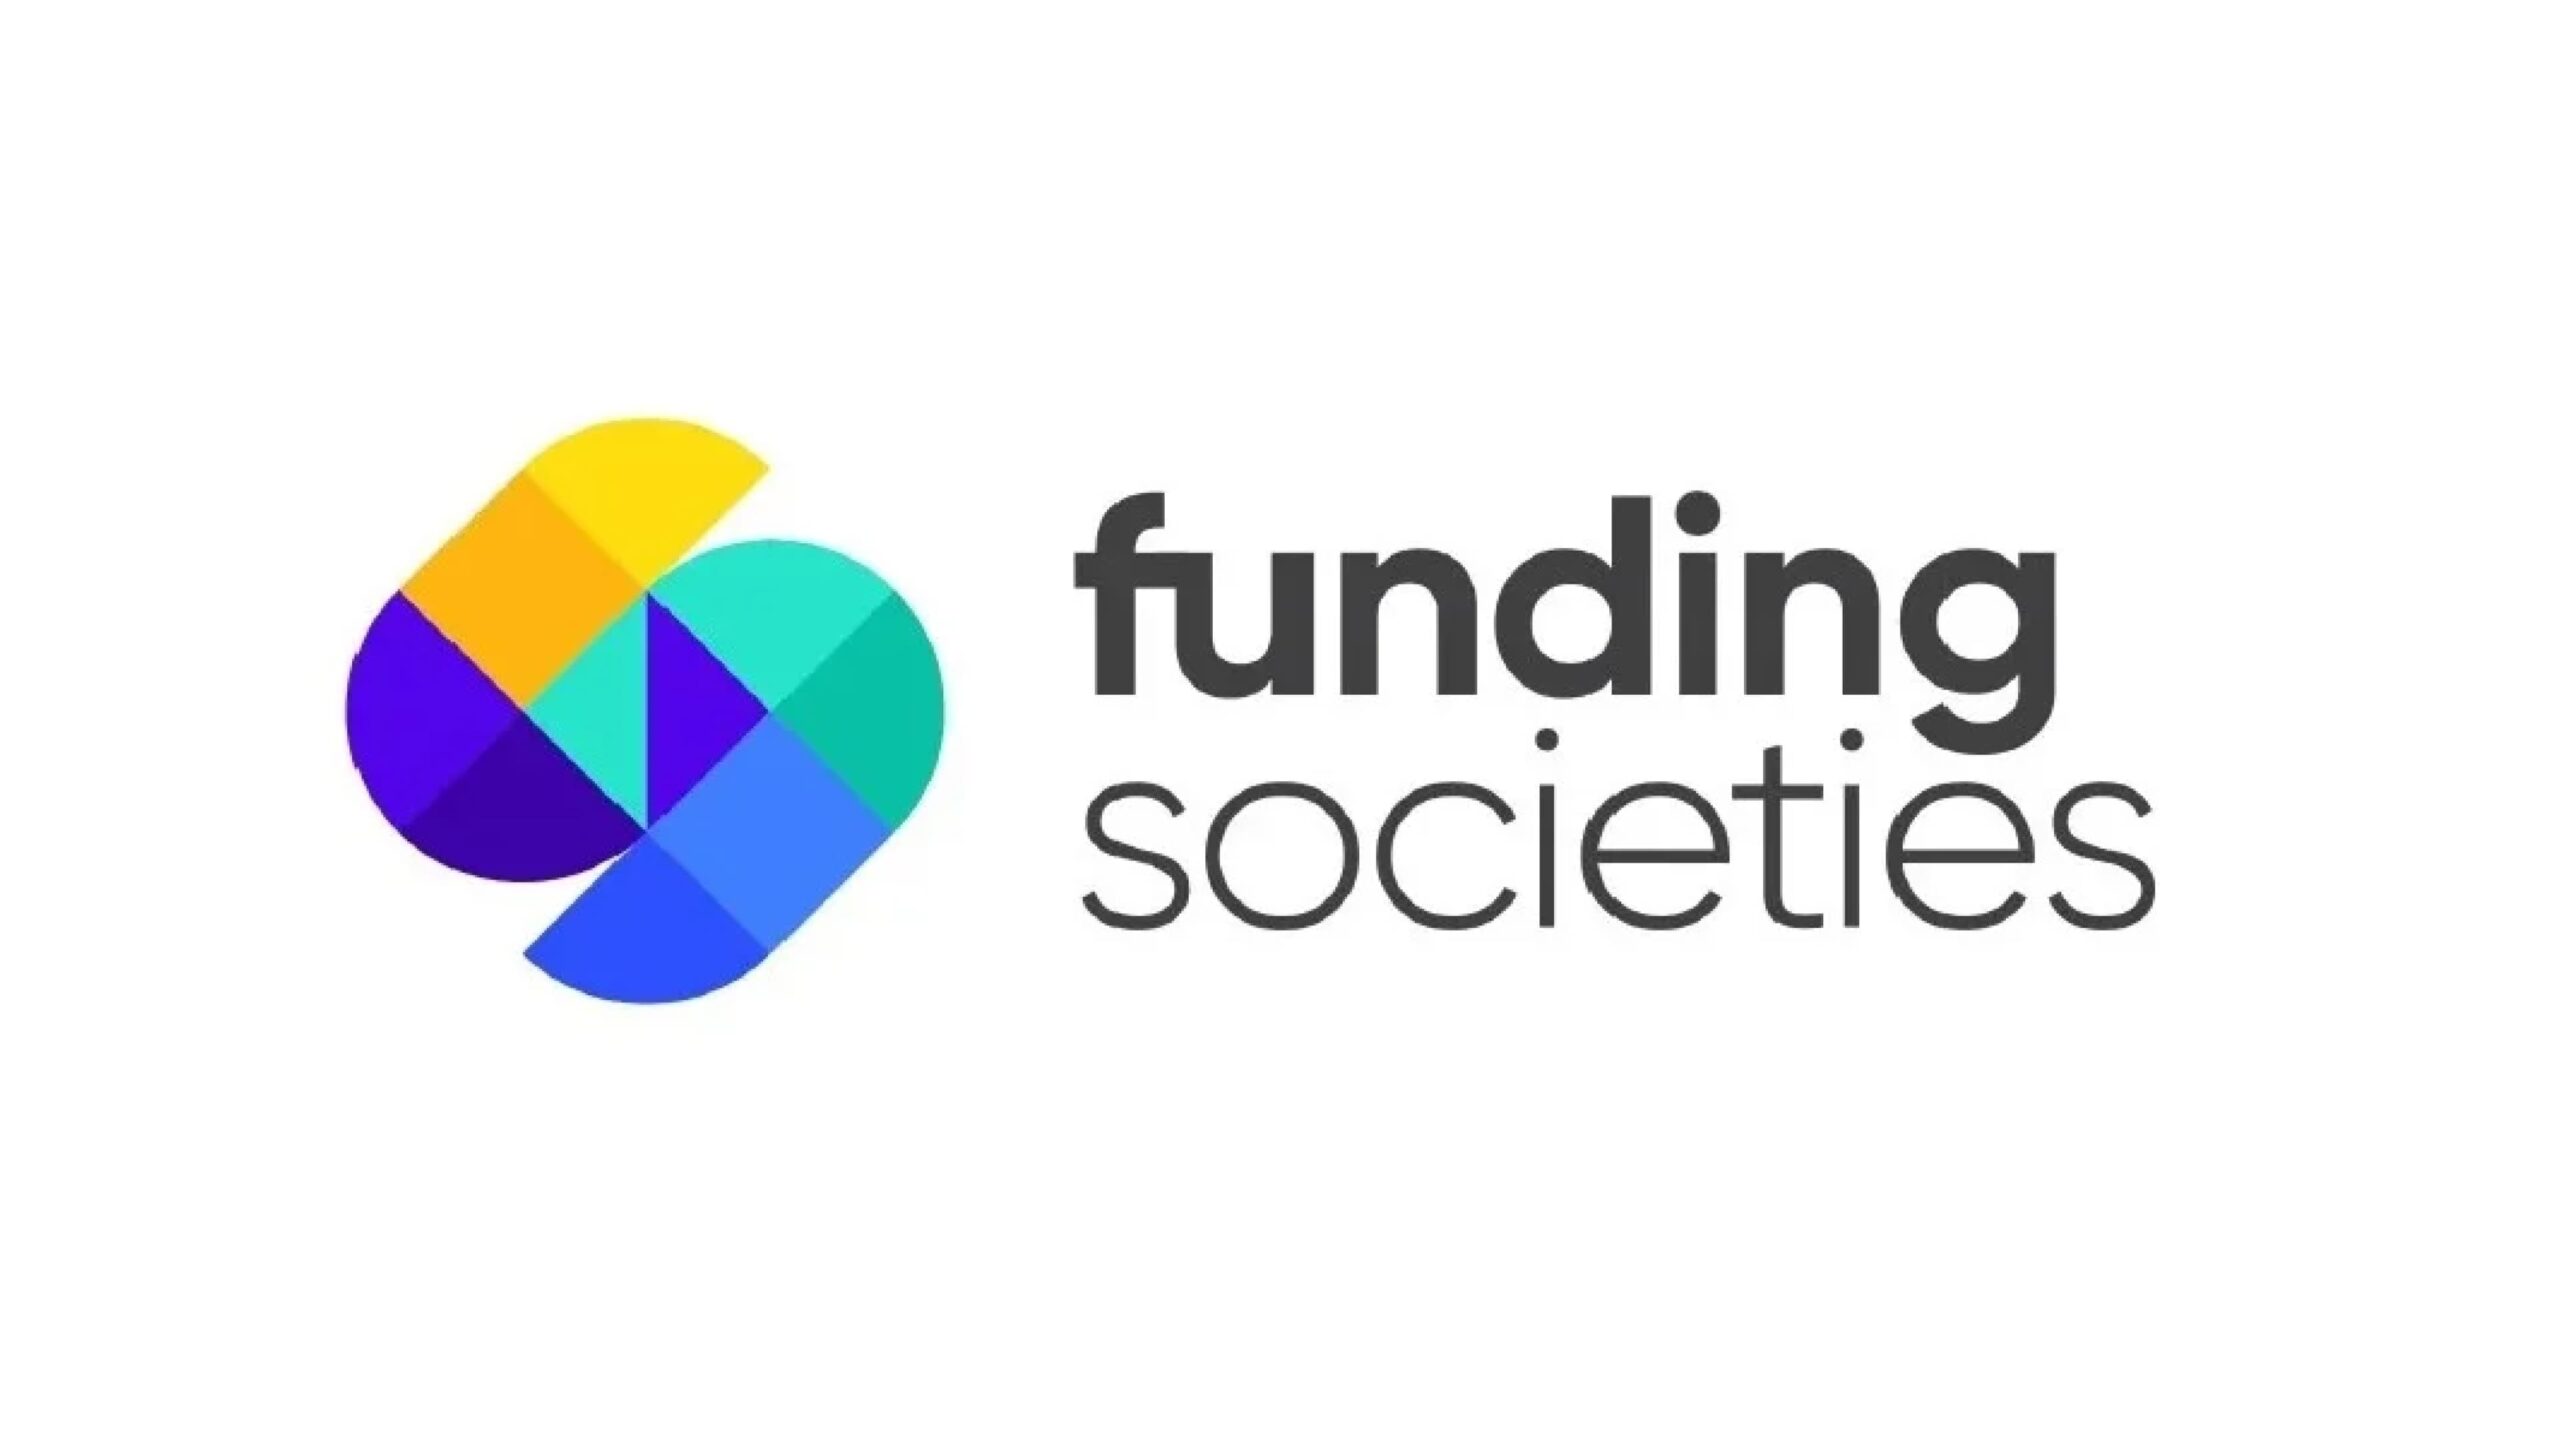 Funding Societiesが2,700万ドルの借入資金を調達し、中小企業支援を拡大